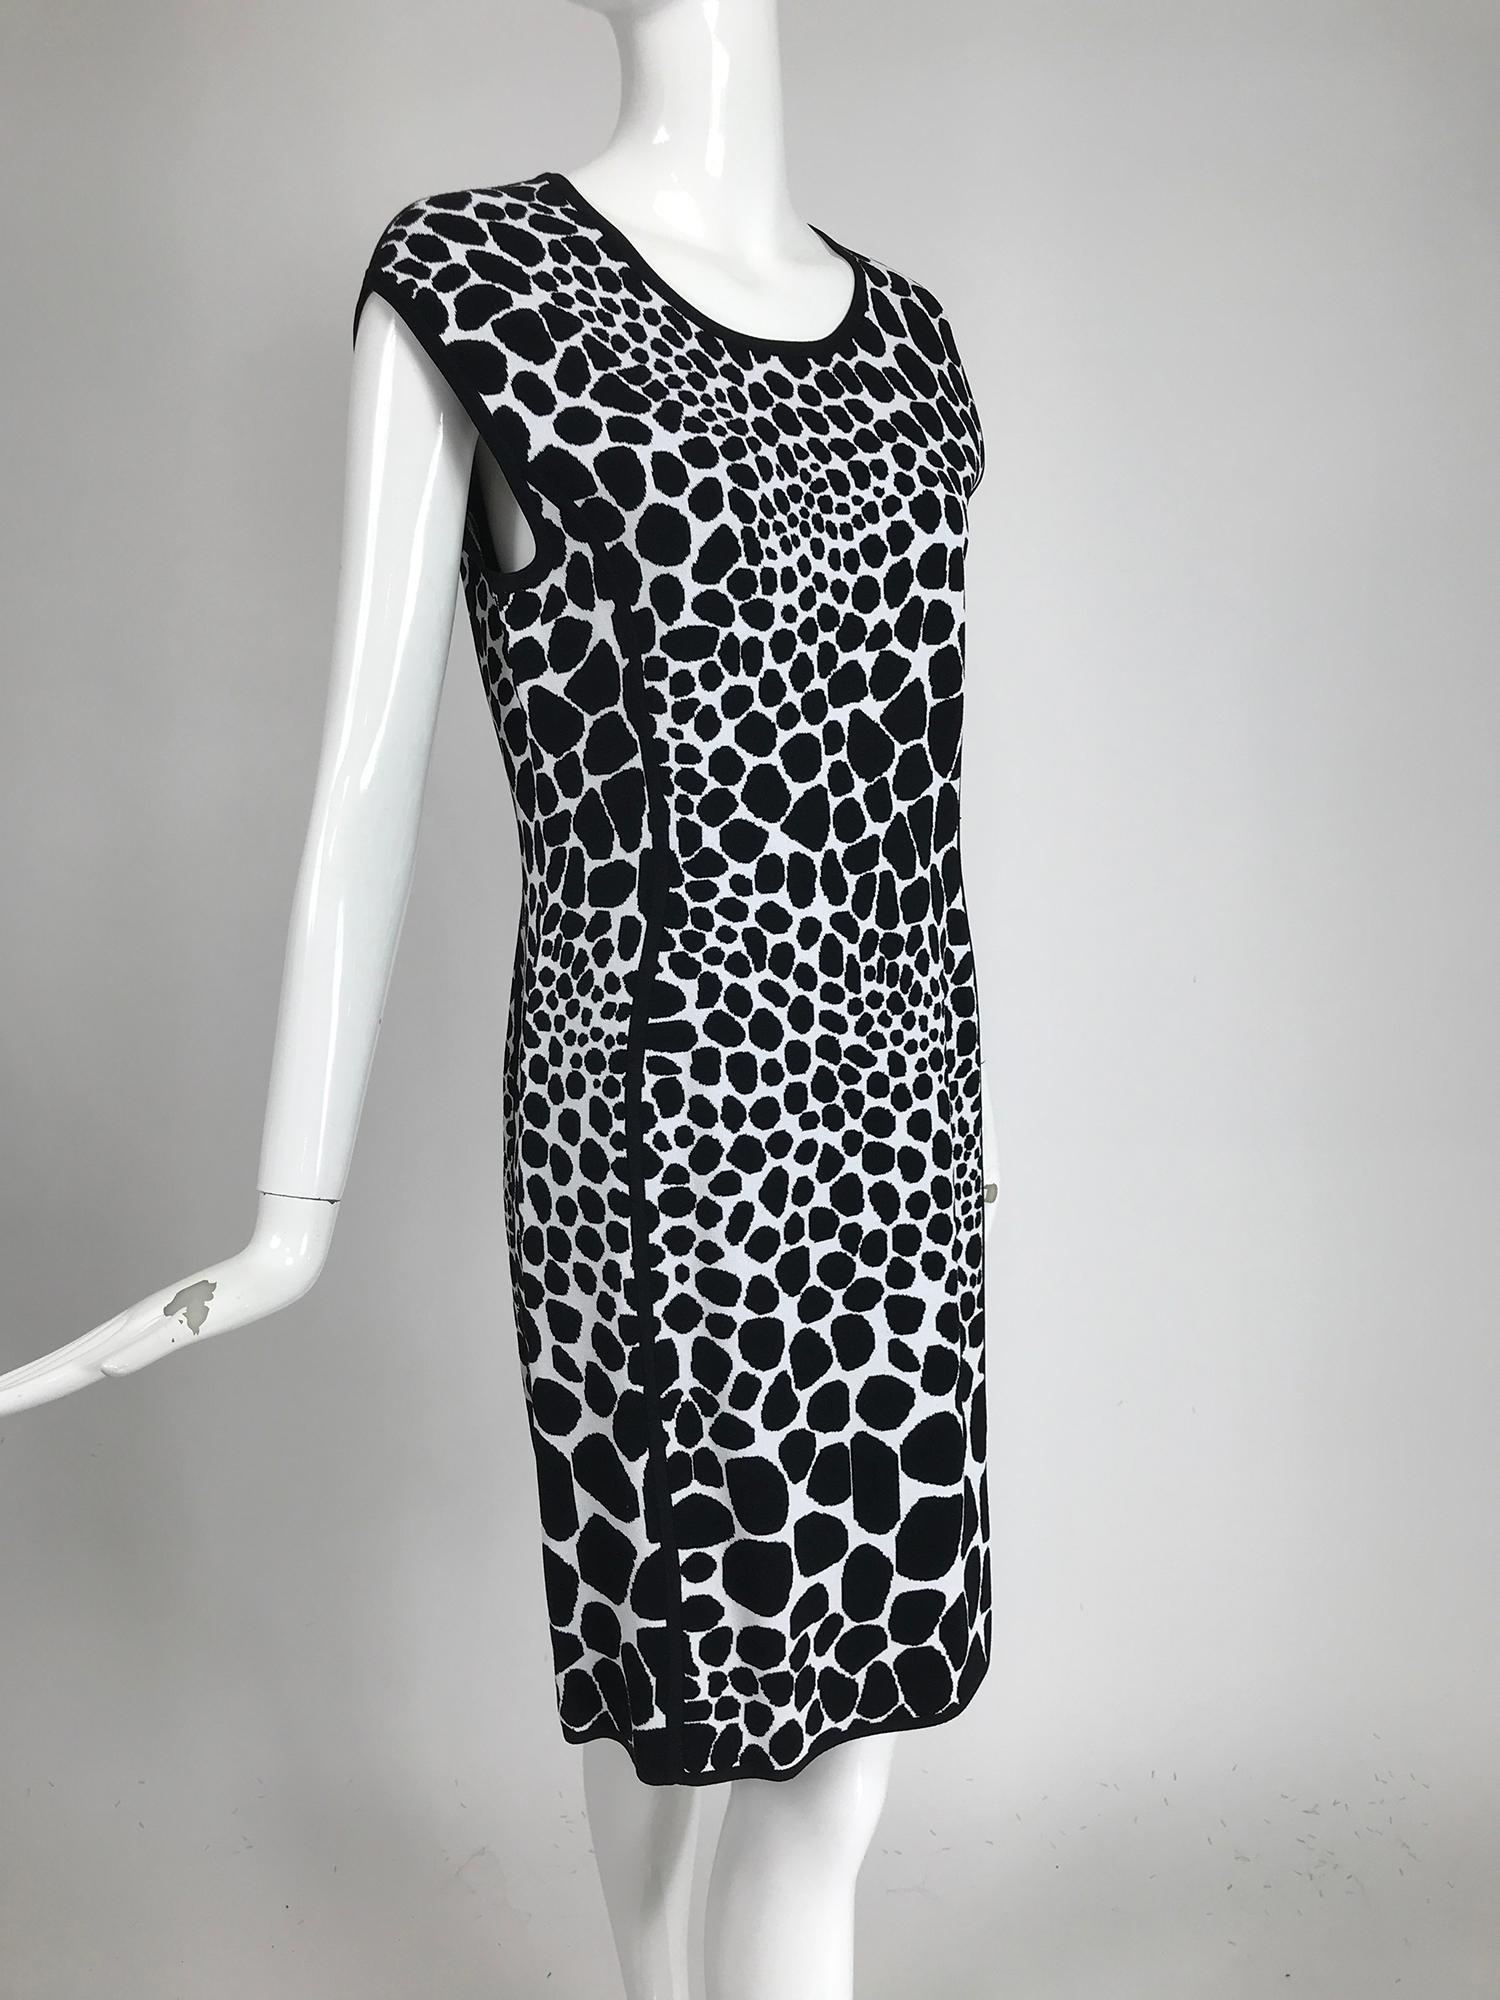 Michael Kors Black & White Knit Stretch Animal Print Dress Large 3